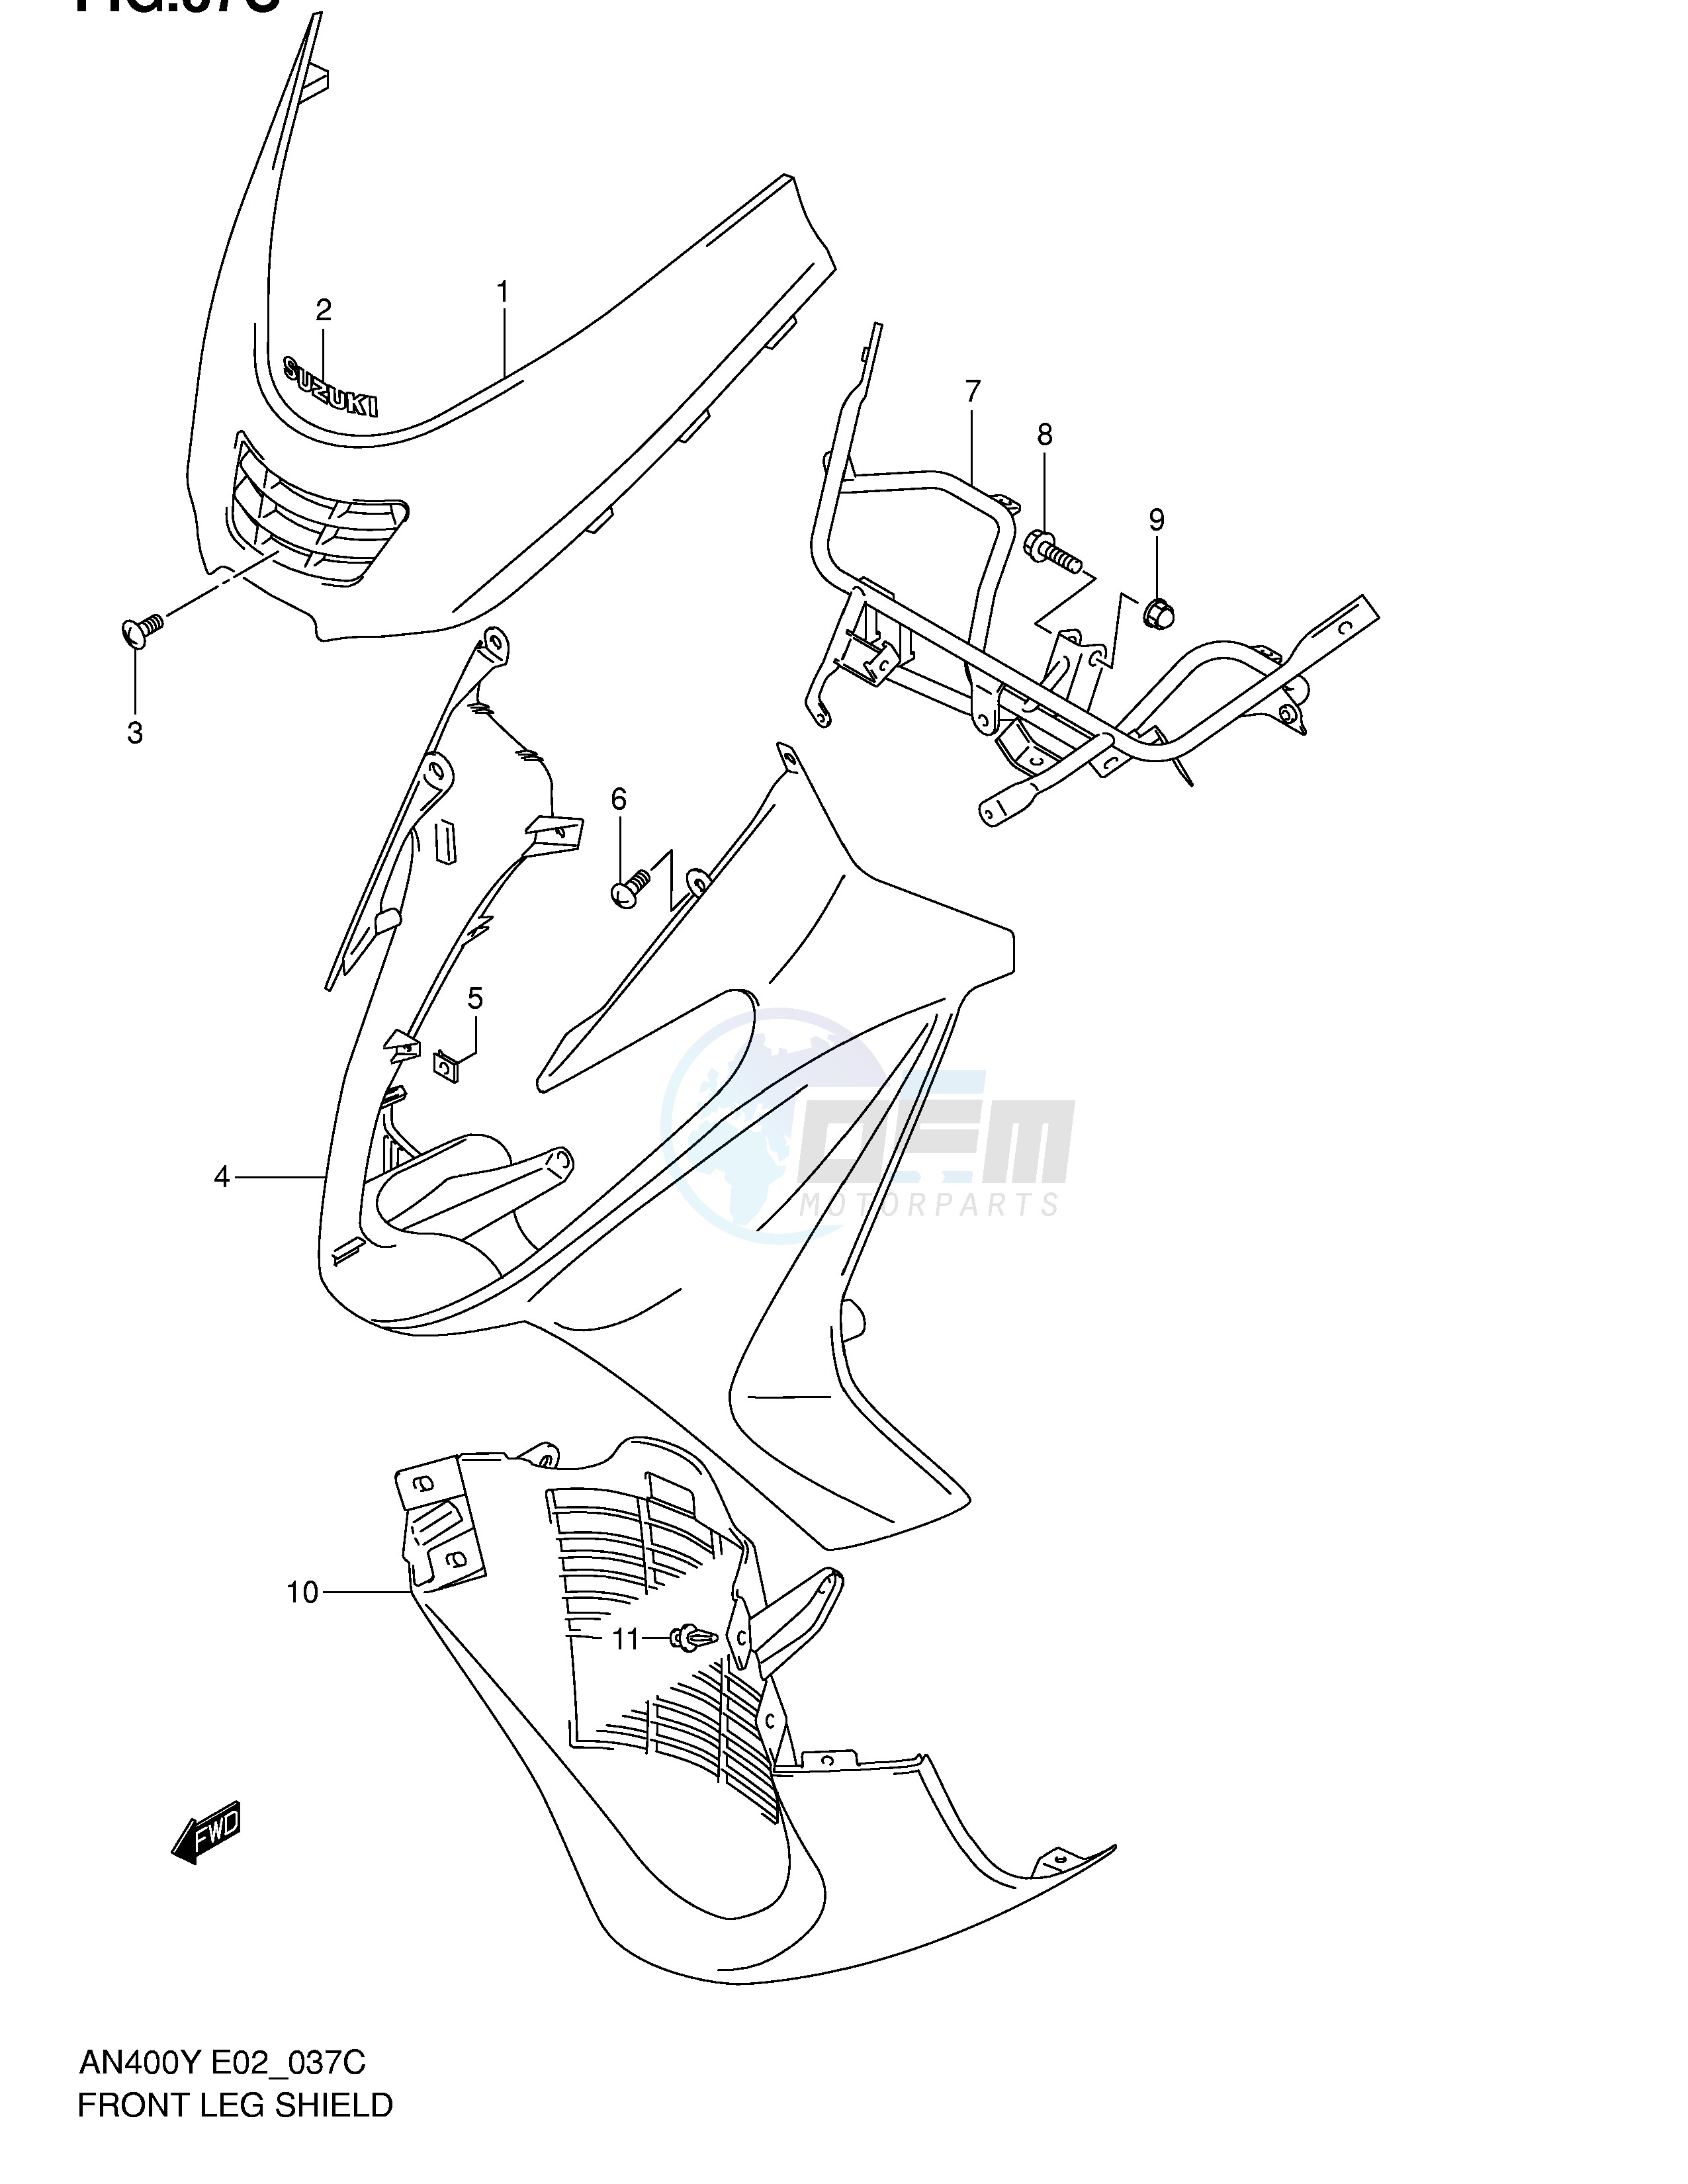 FRONT LEG SHIELD (MODEL K2) image